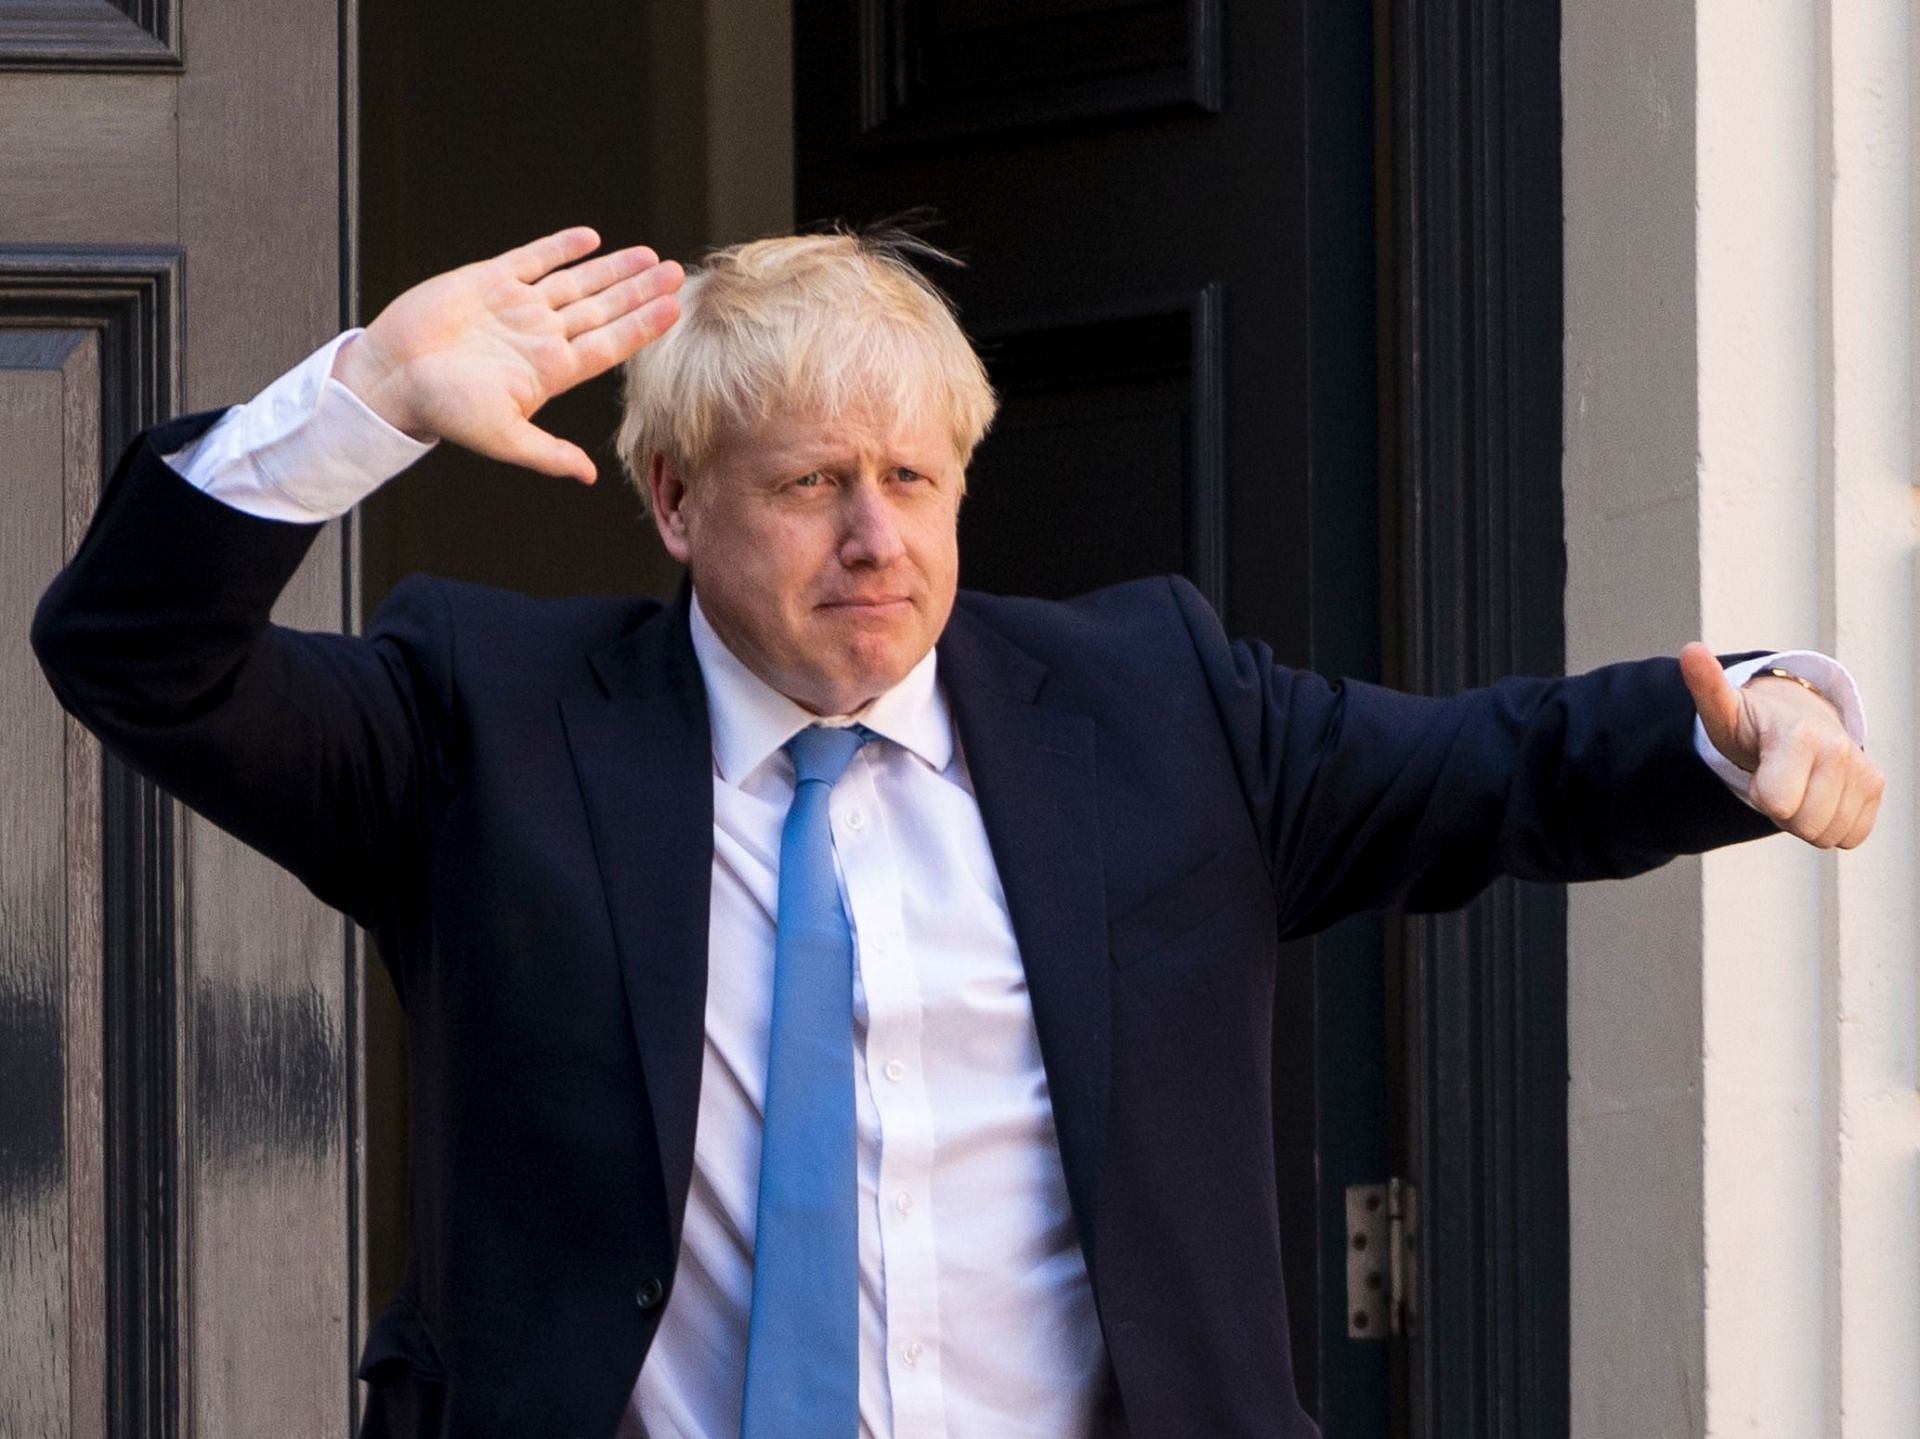 UK Prime Minister Boris Johnson (Image via Leon Neal/AFP/Getty Images)